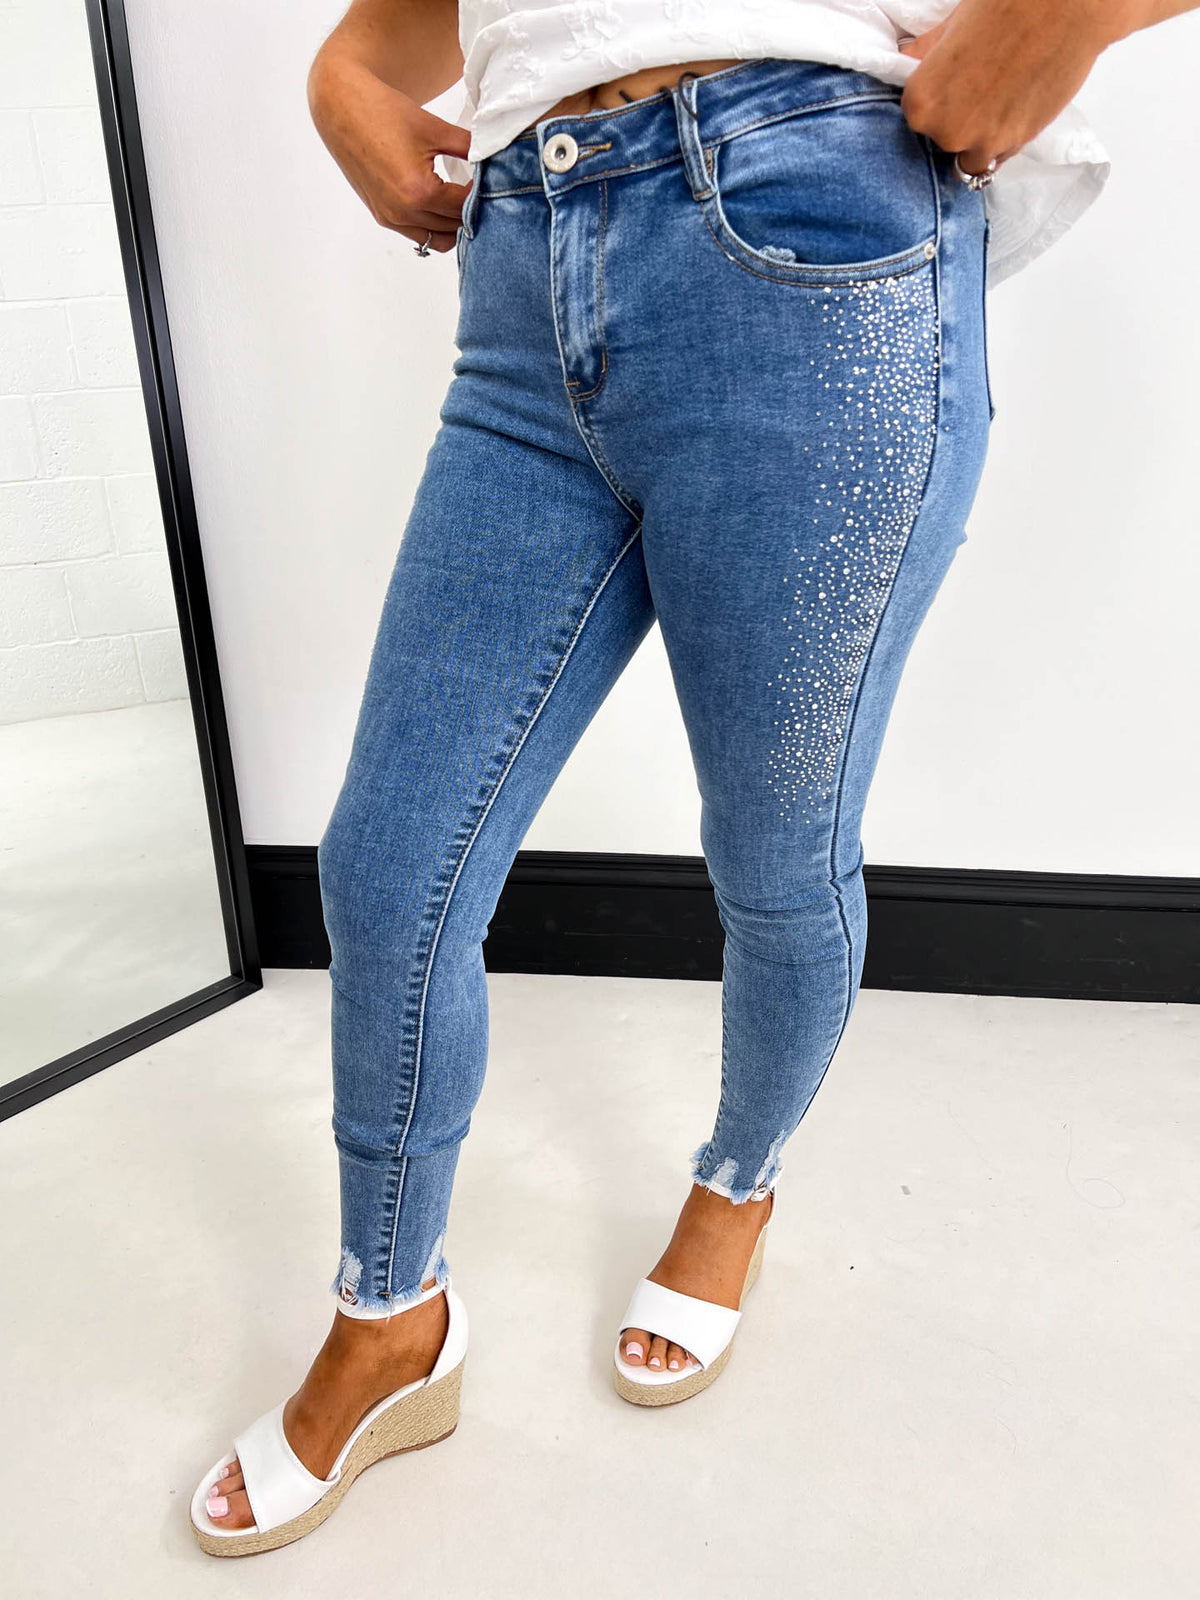 The Remi- Embellished skinny jean